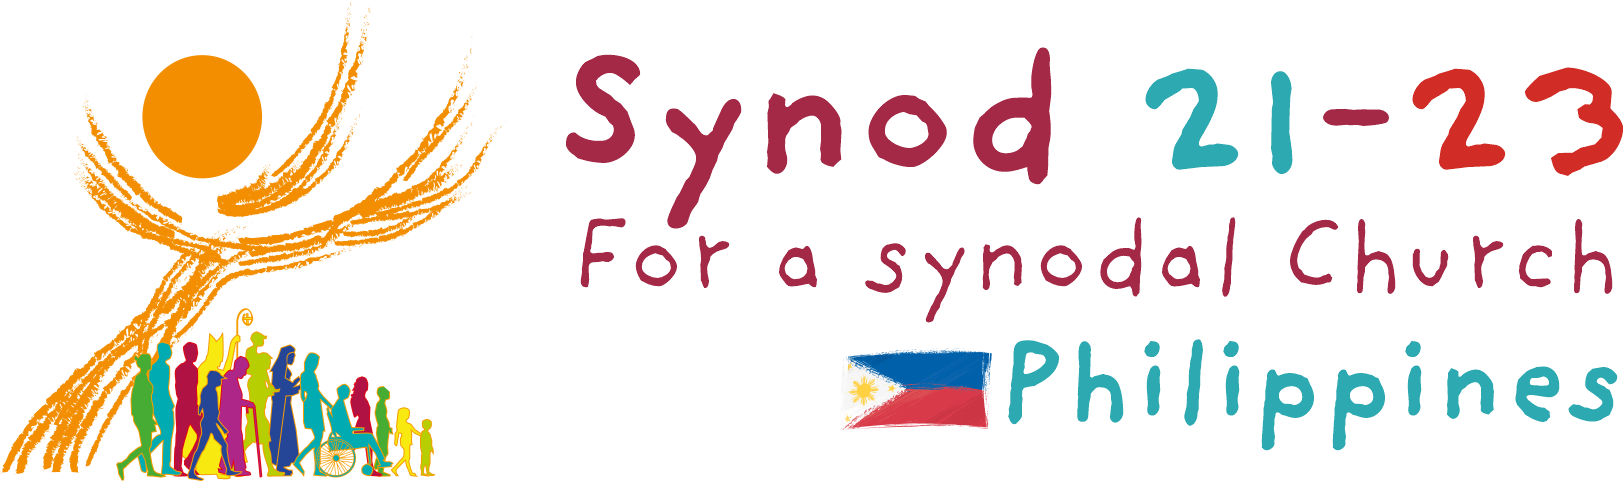 SYNOD 2021 - 2023 Philippines